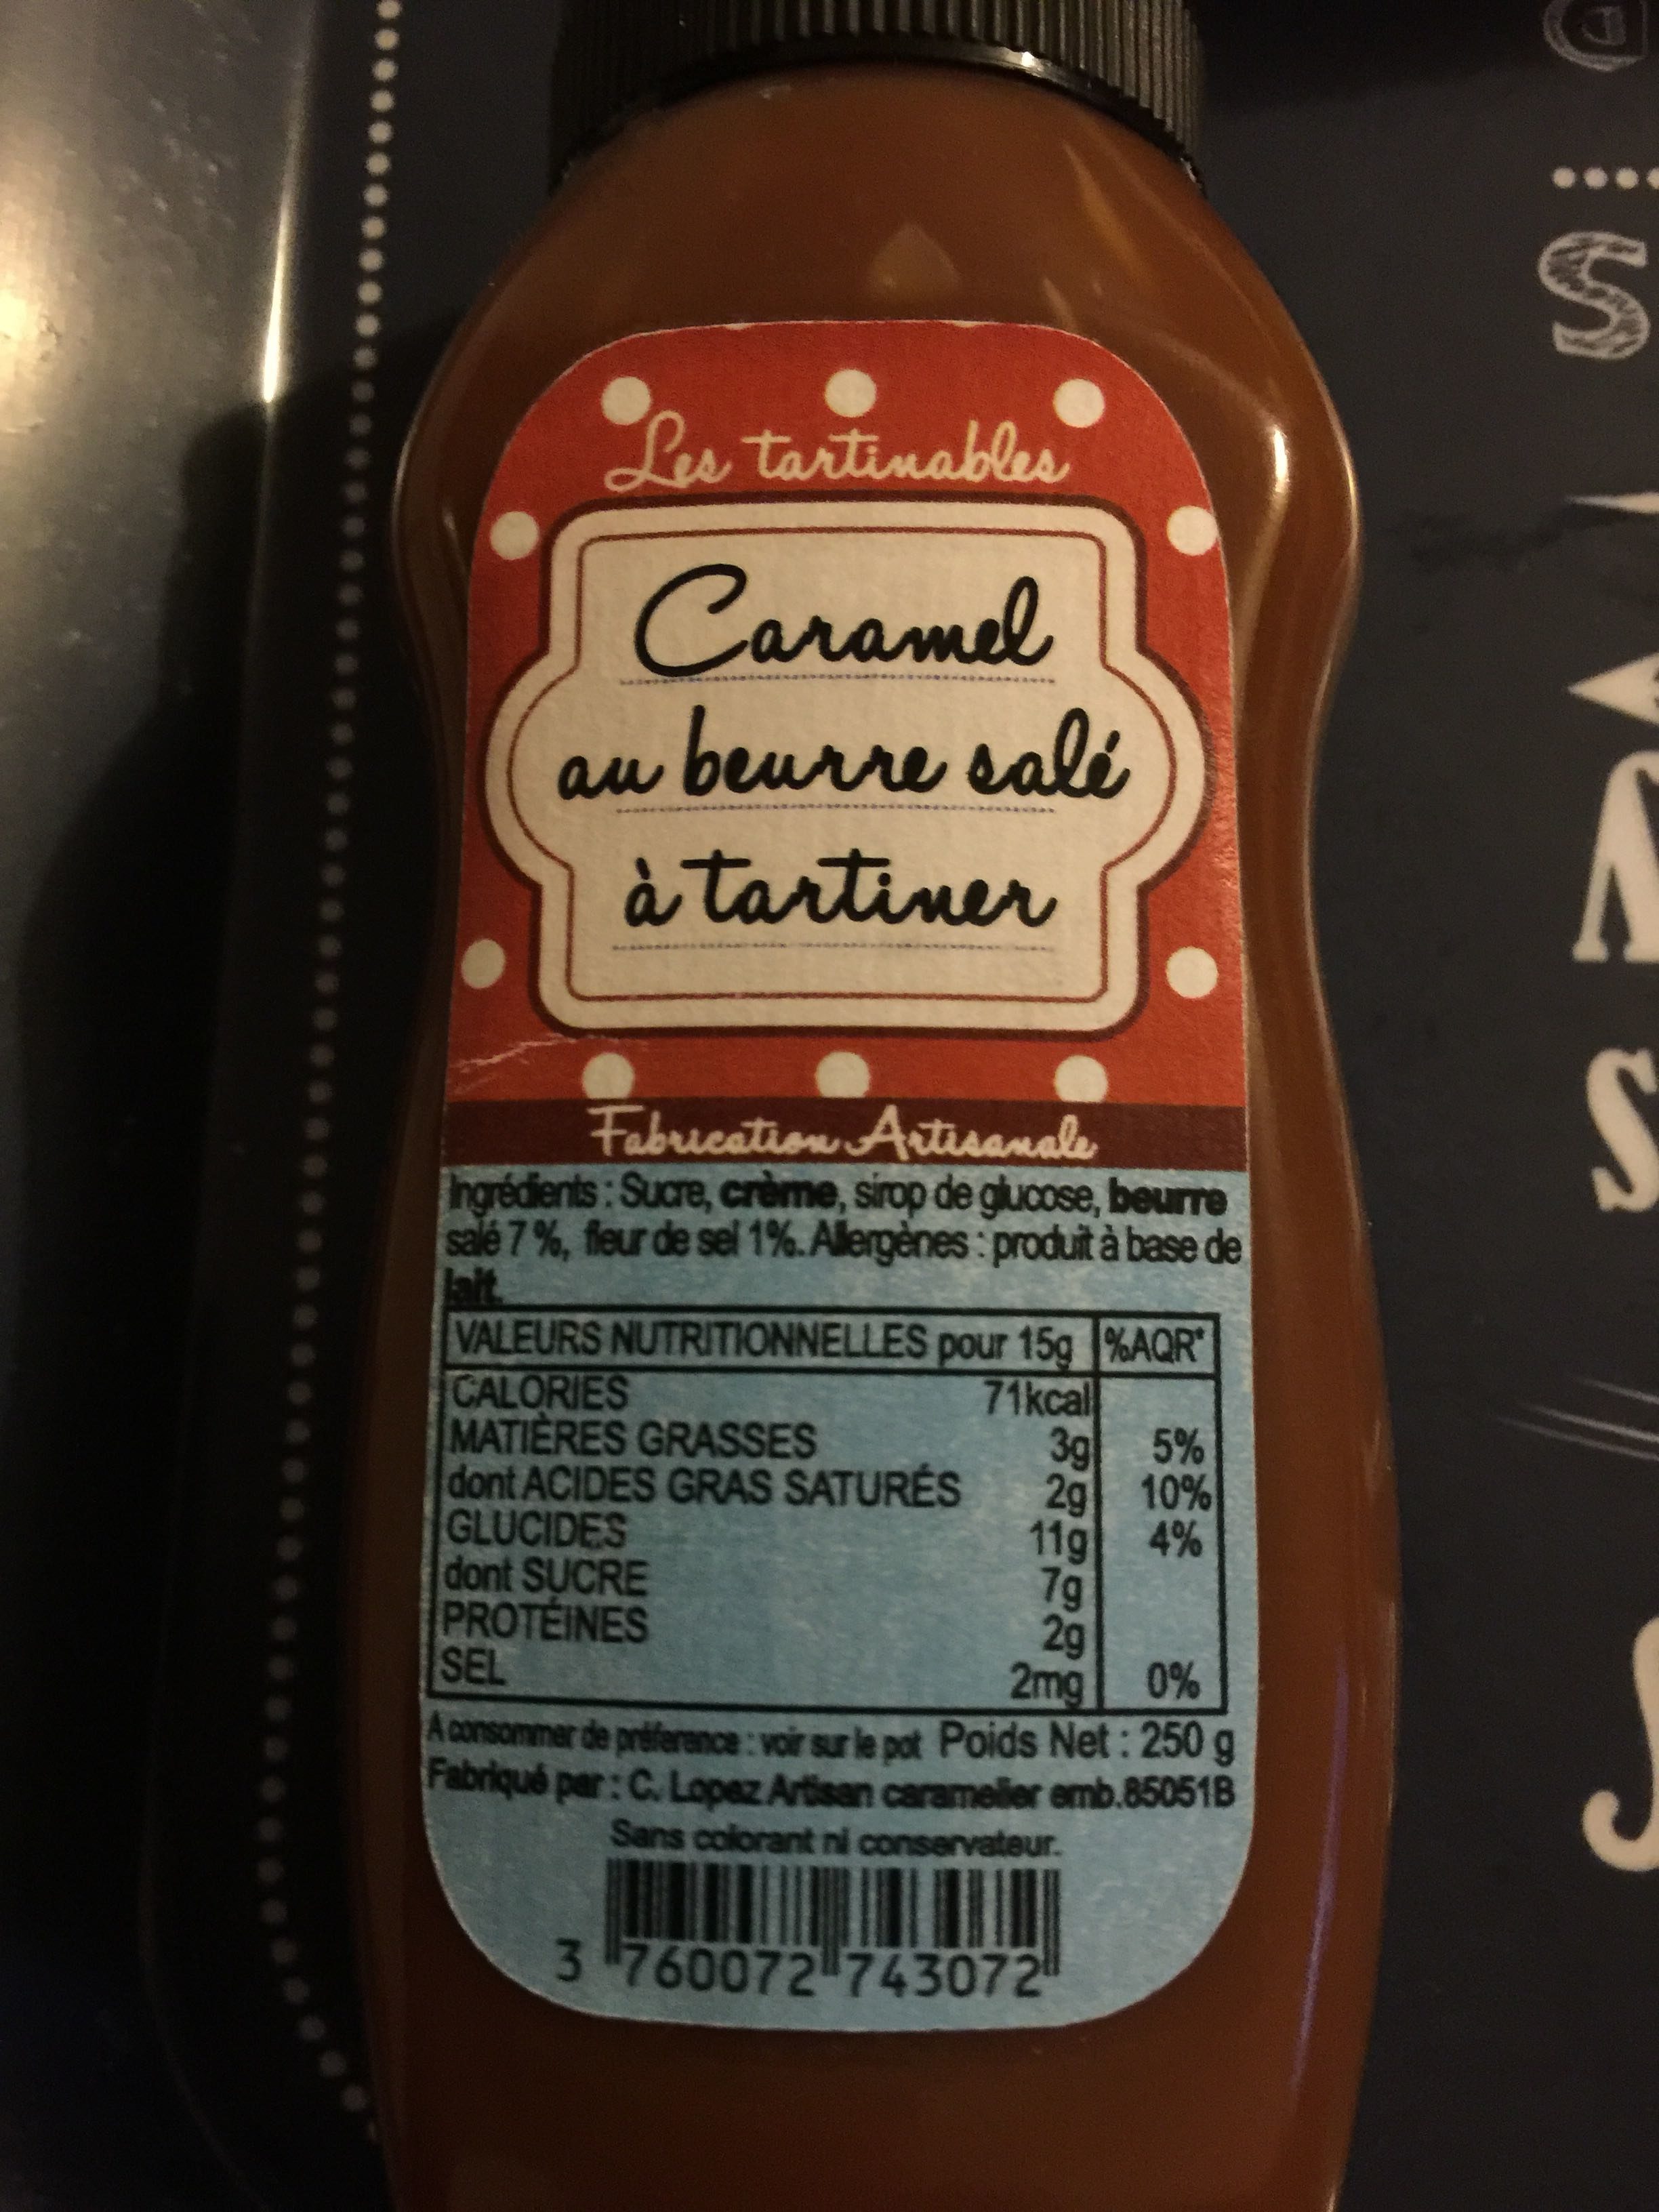 Caramel au beurre salé à tartiner - Product - fr